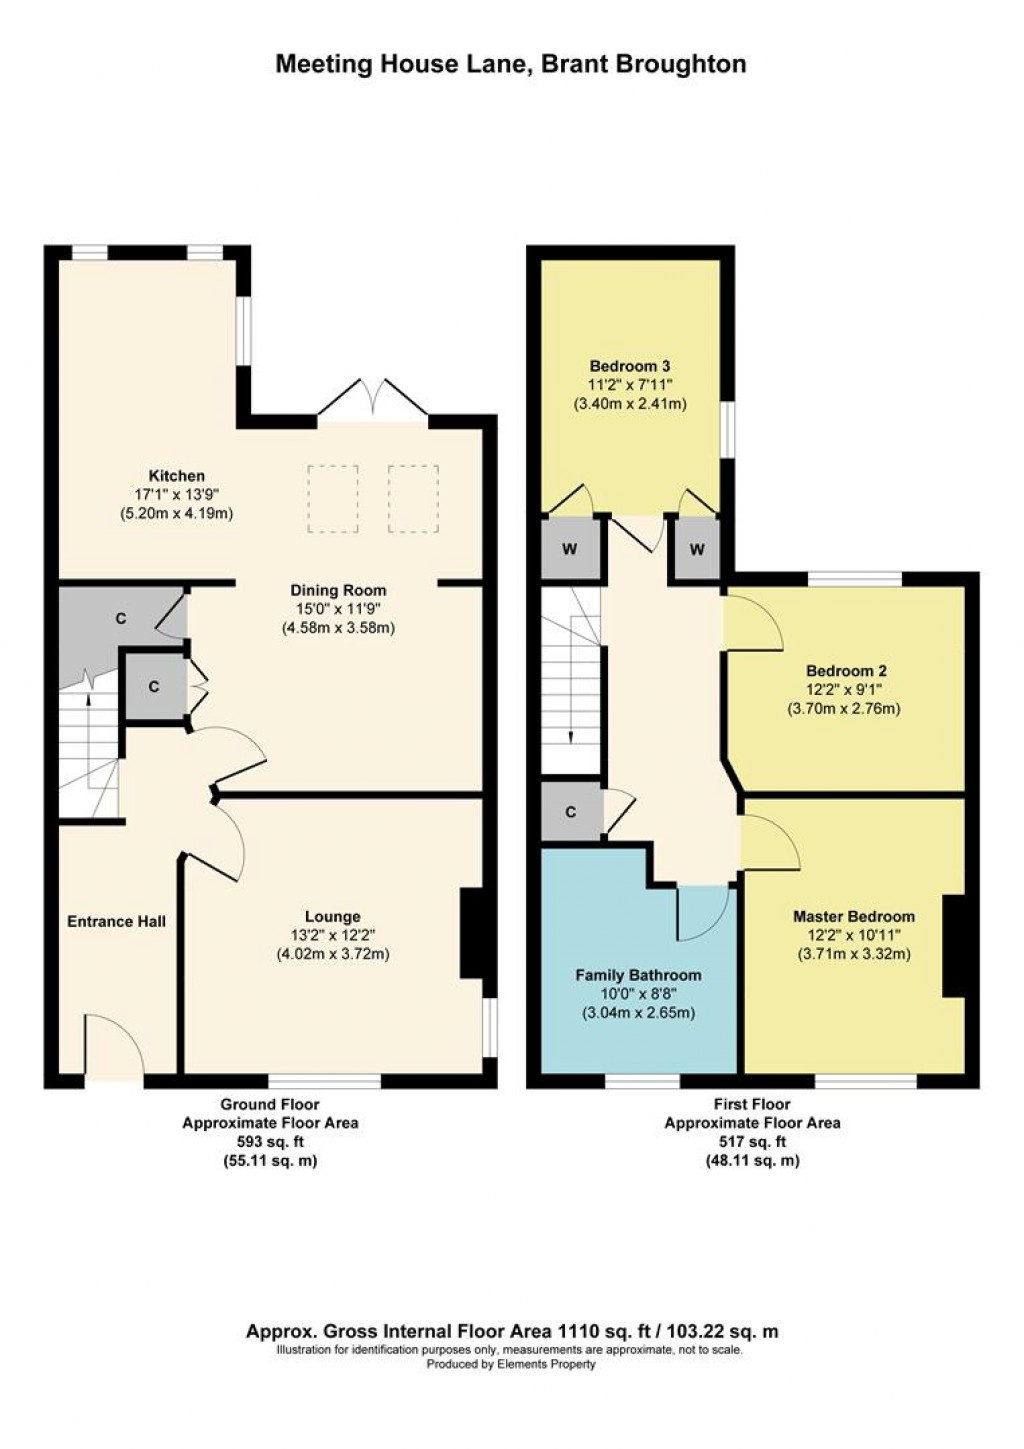 Floorplans For Meeting House Lane, Brant Broughton, Lincoln